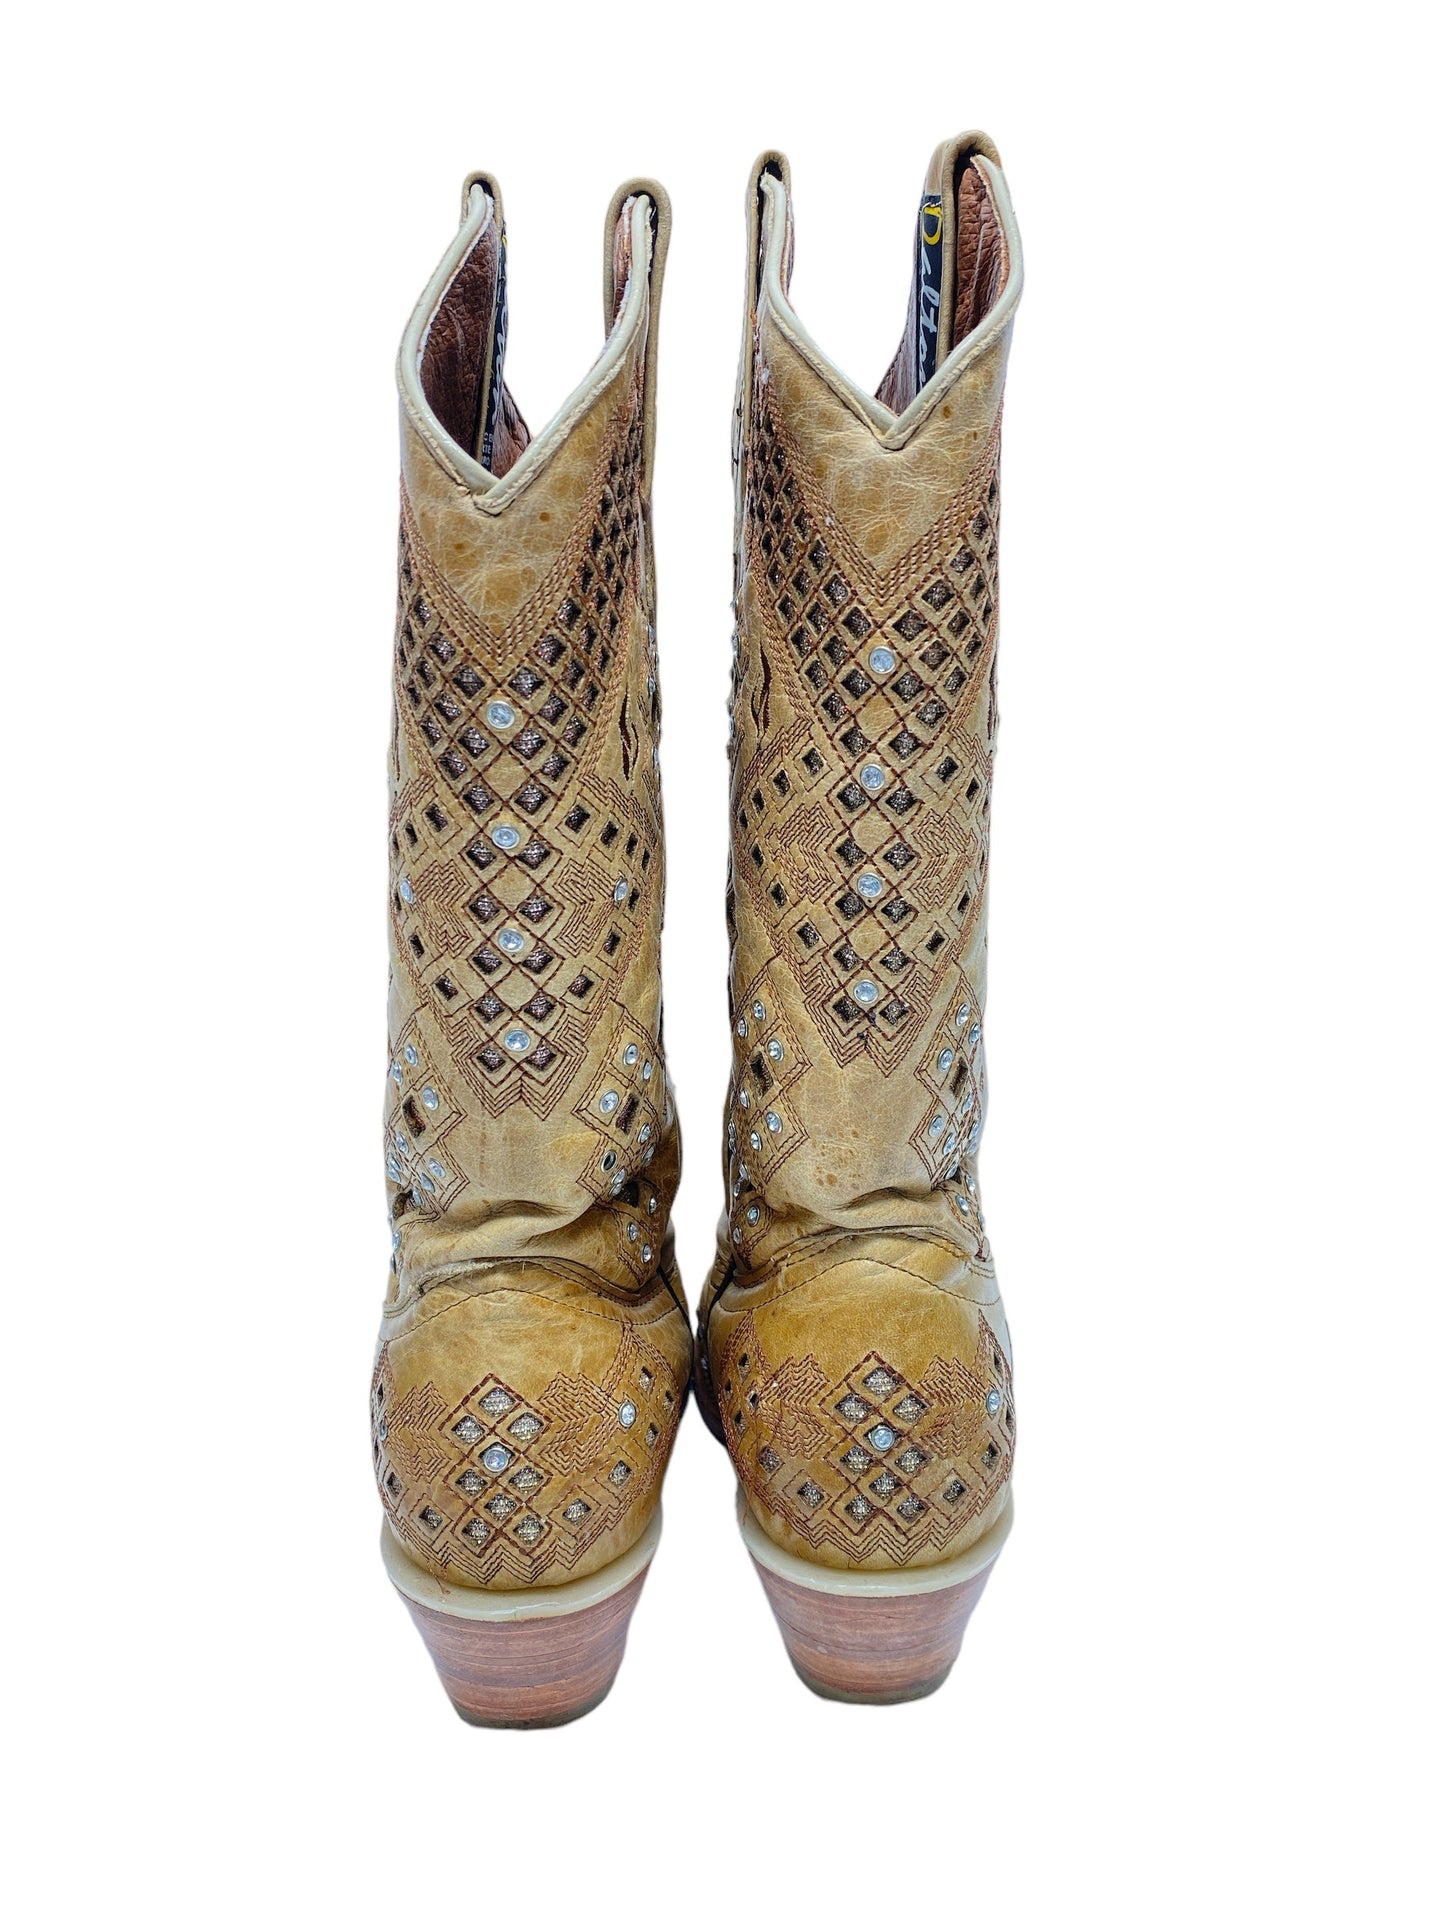 Boots Western By Dalton Size: 7